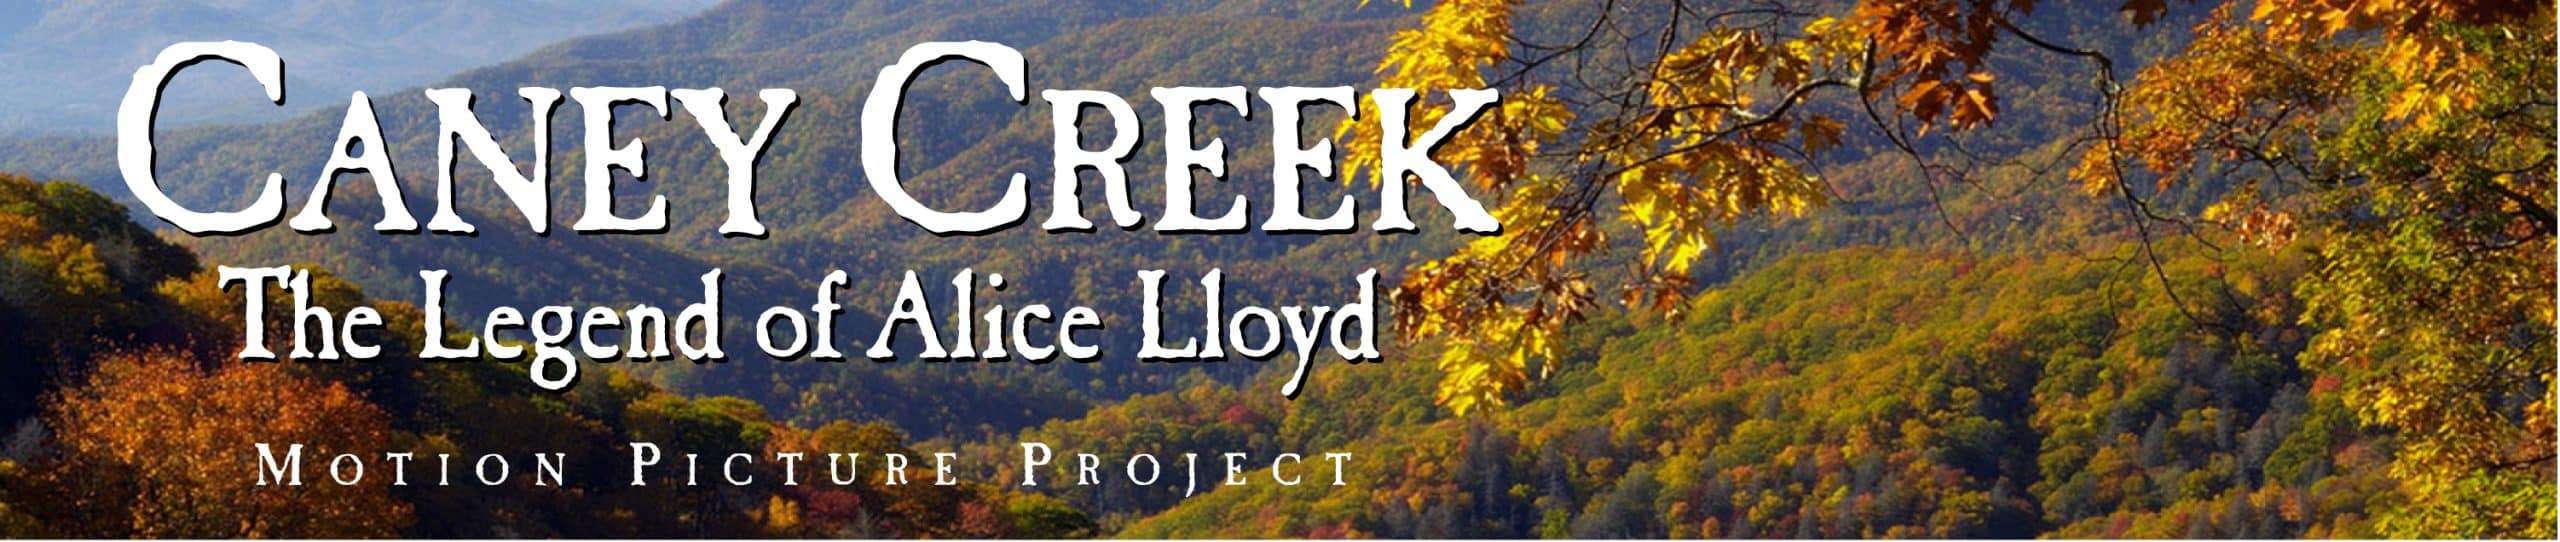 Caney Creek Movie